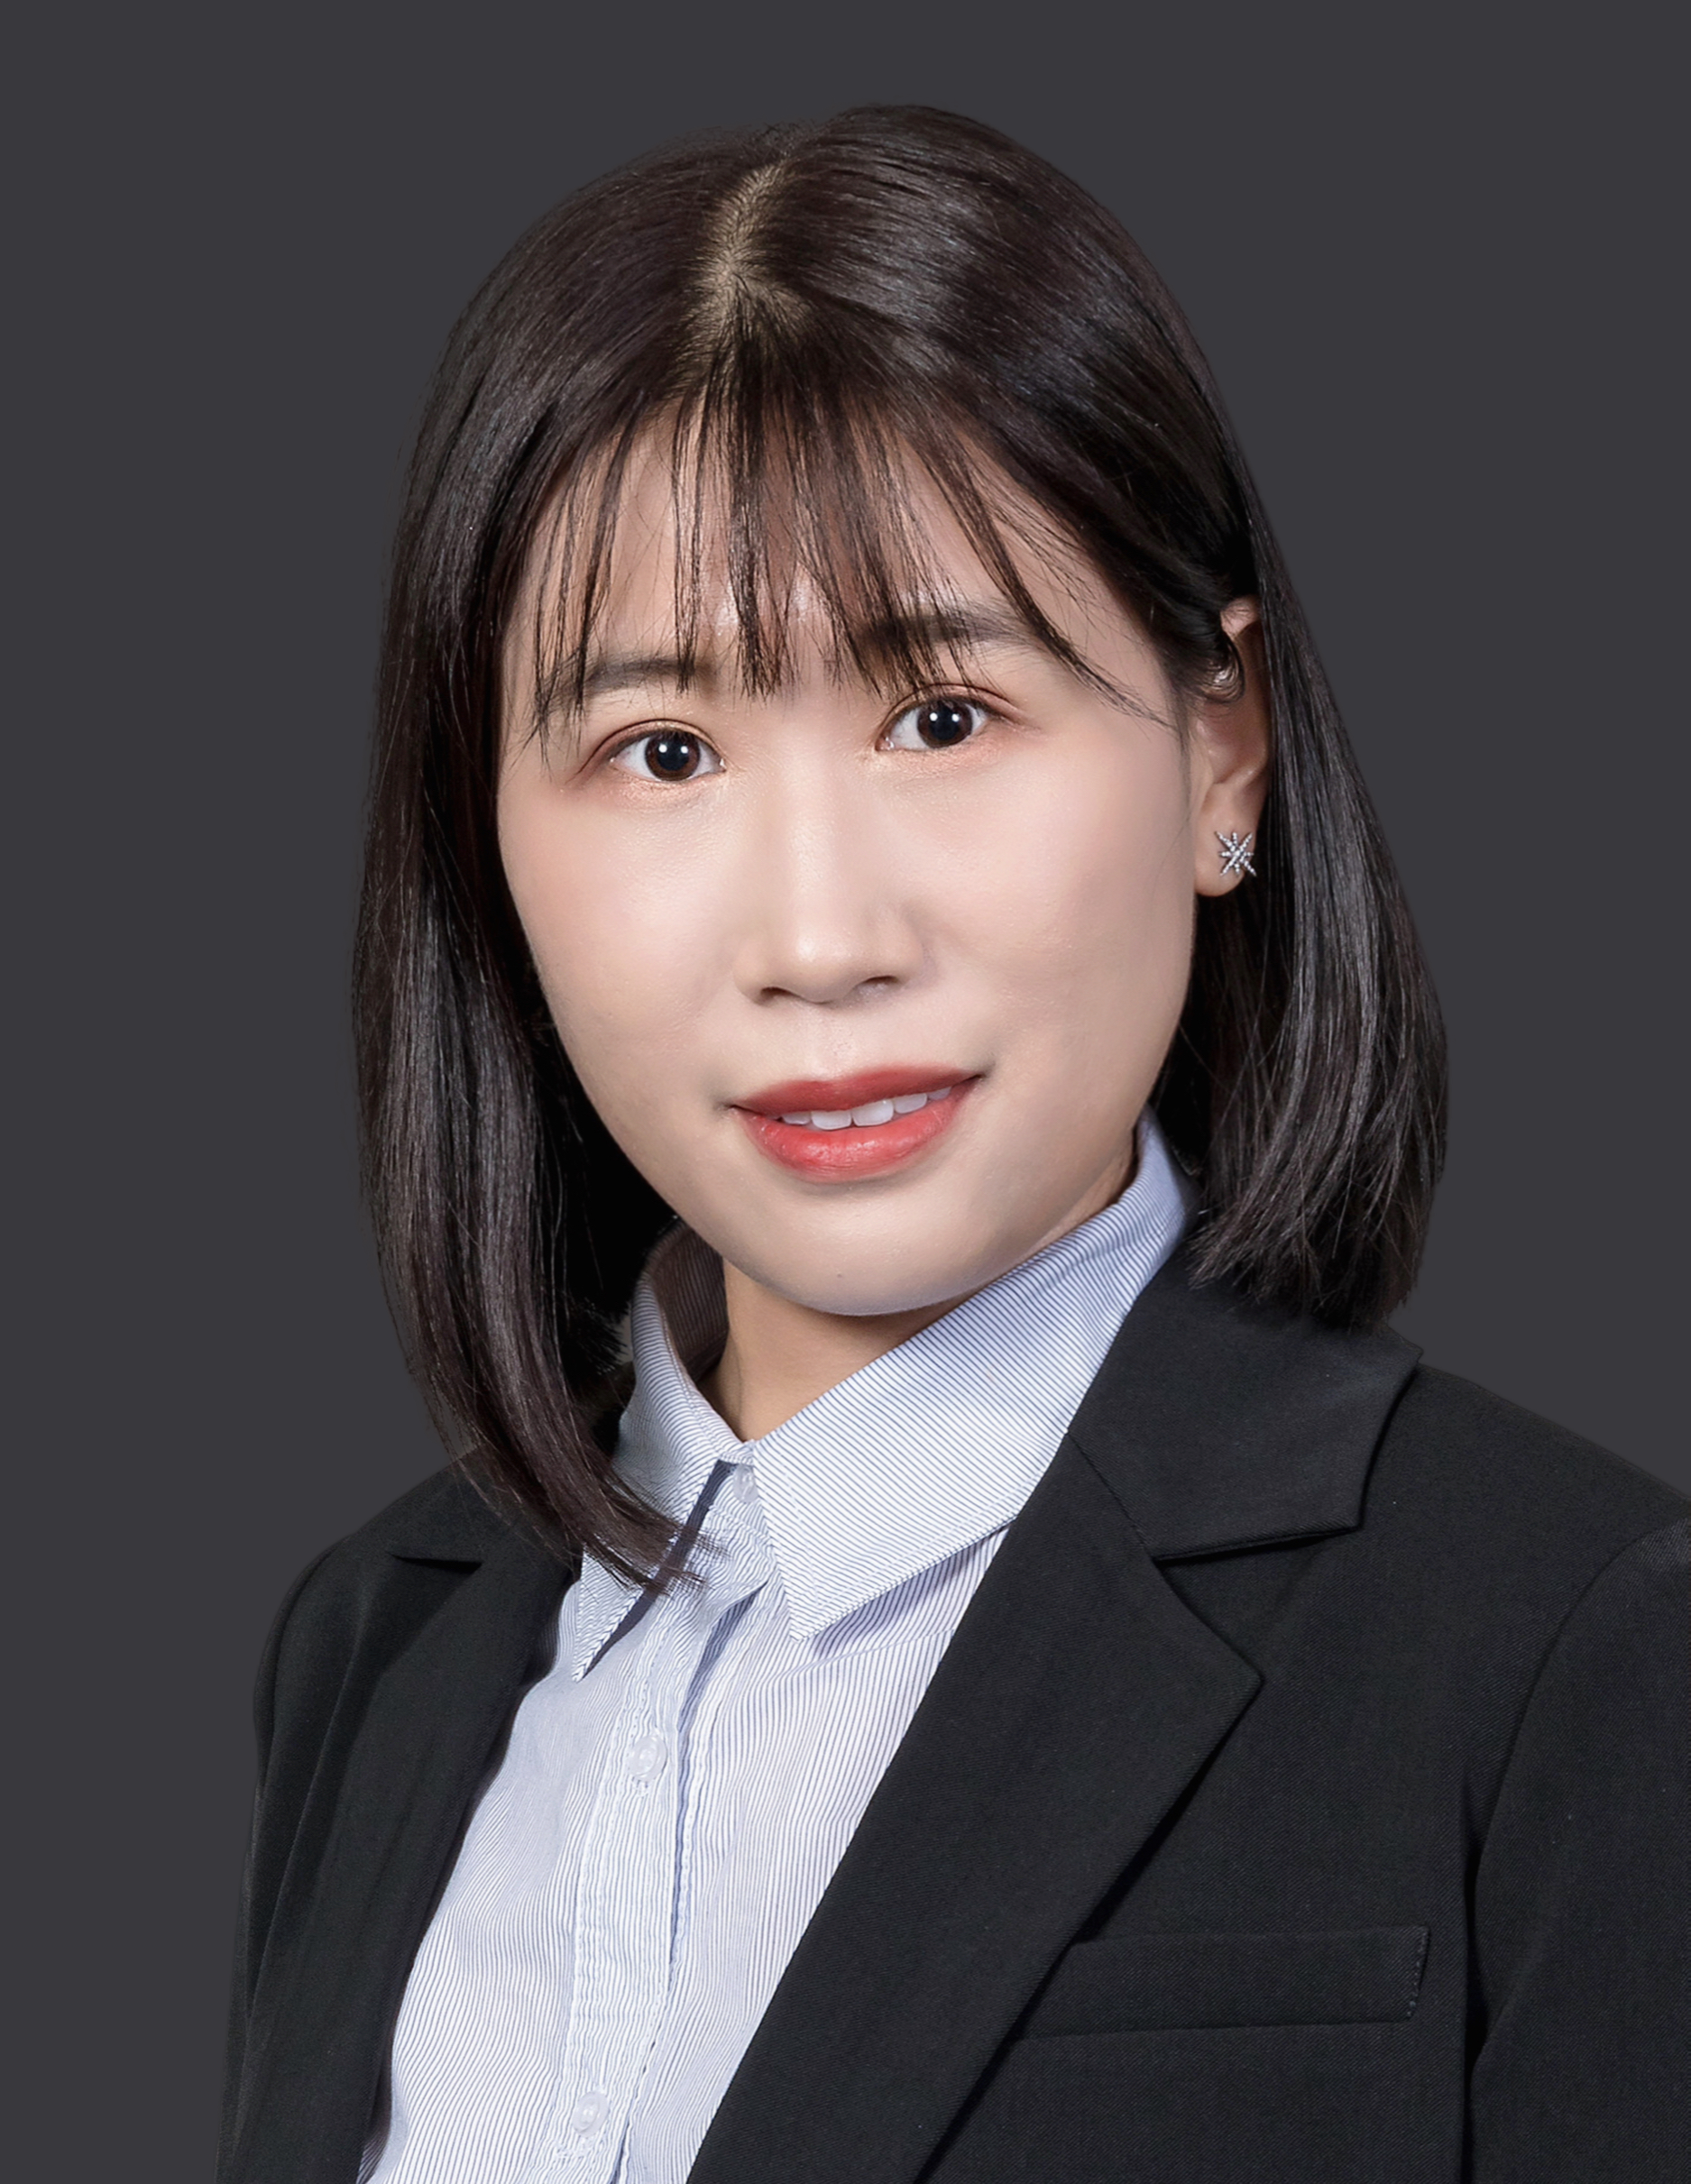 Dr. Ying Zhang